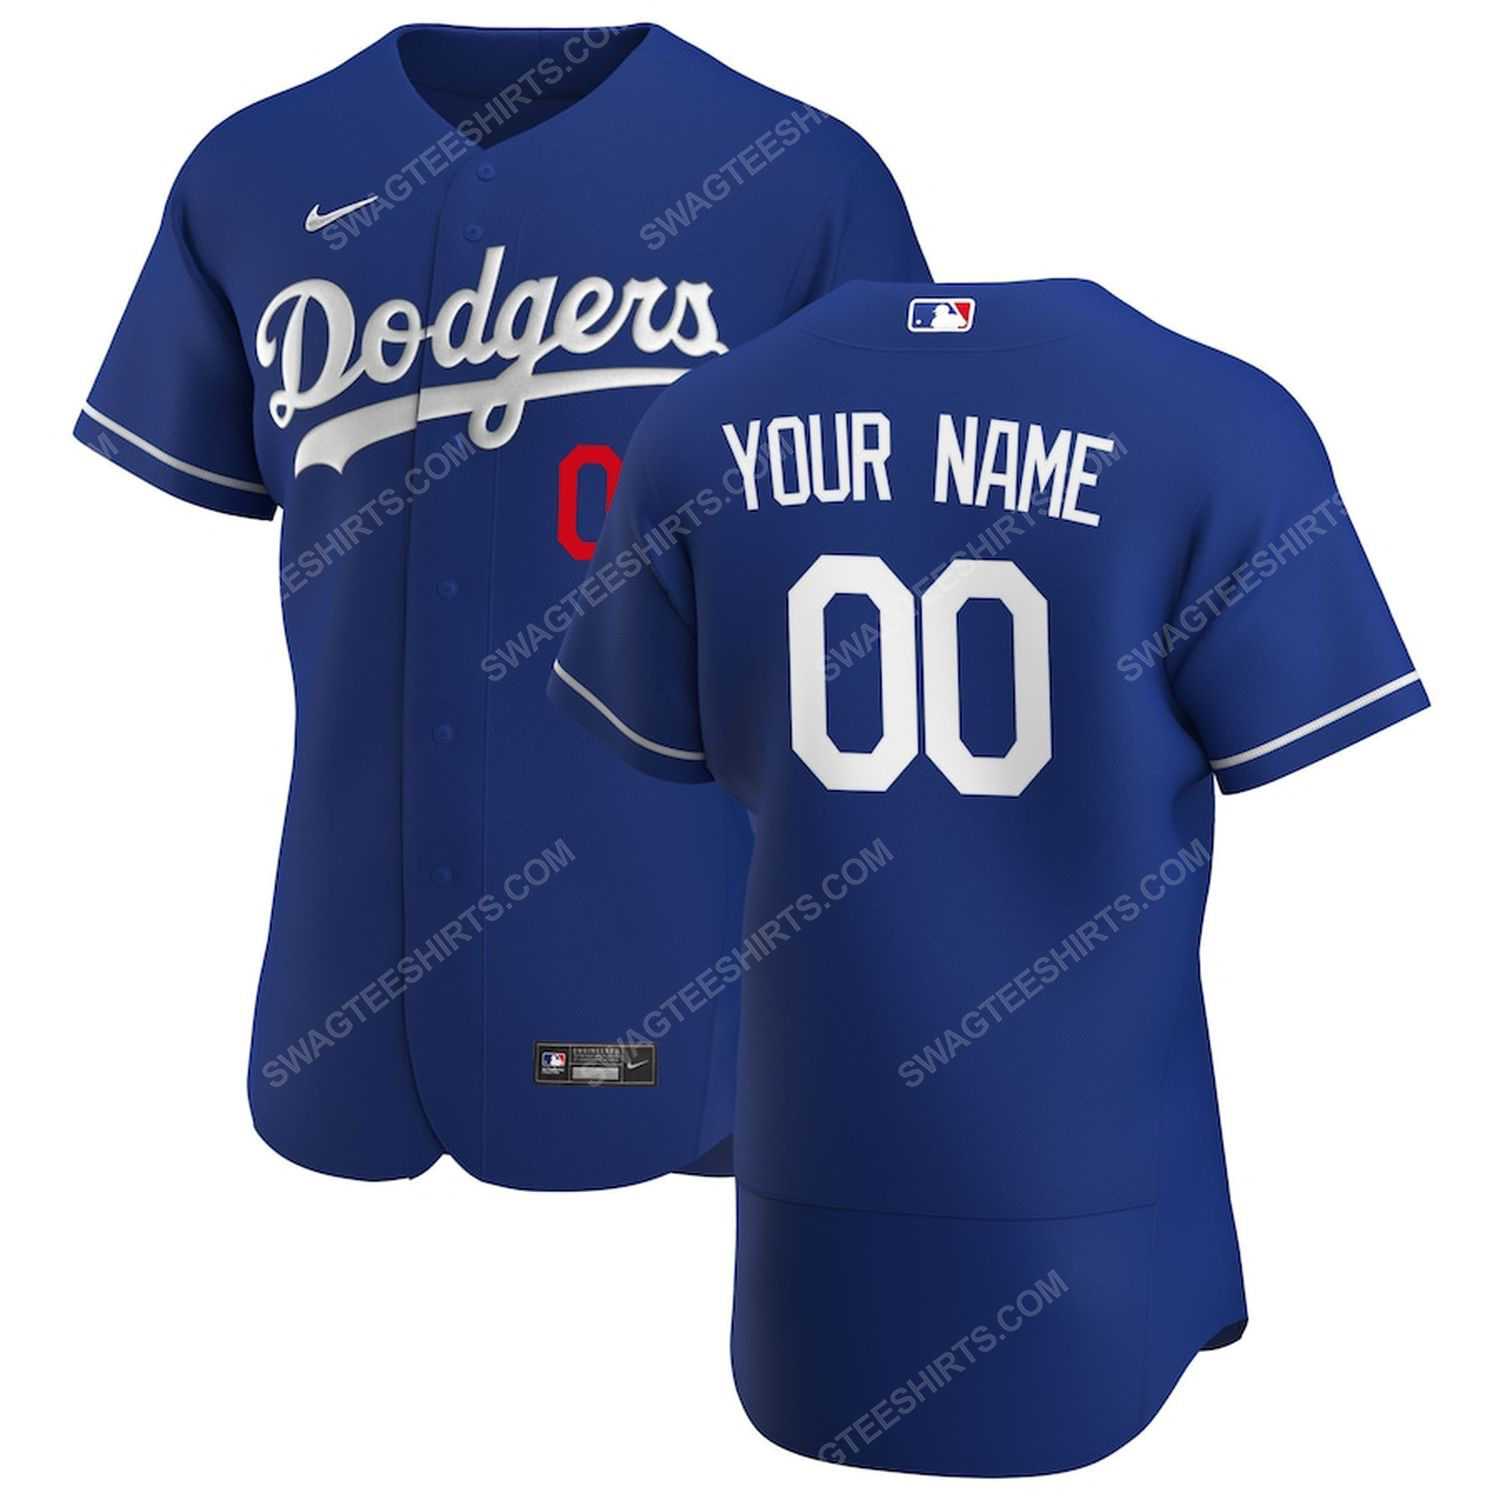 Personalized major league baseball los angeles dodgers baseball jersey-royal